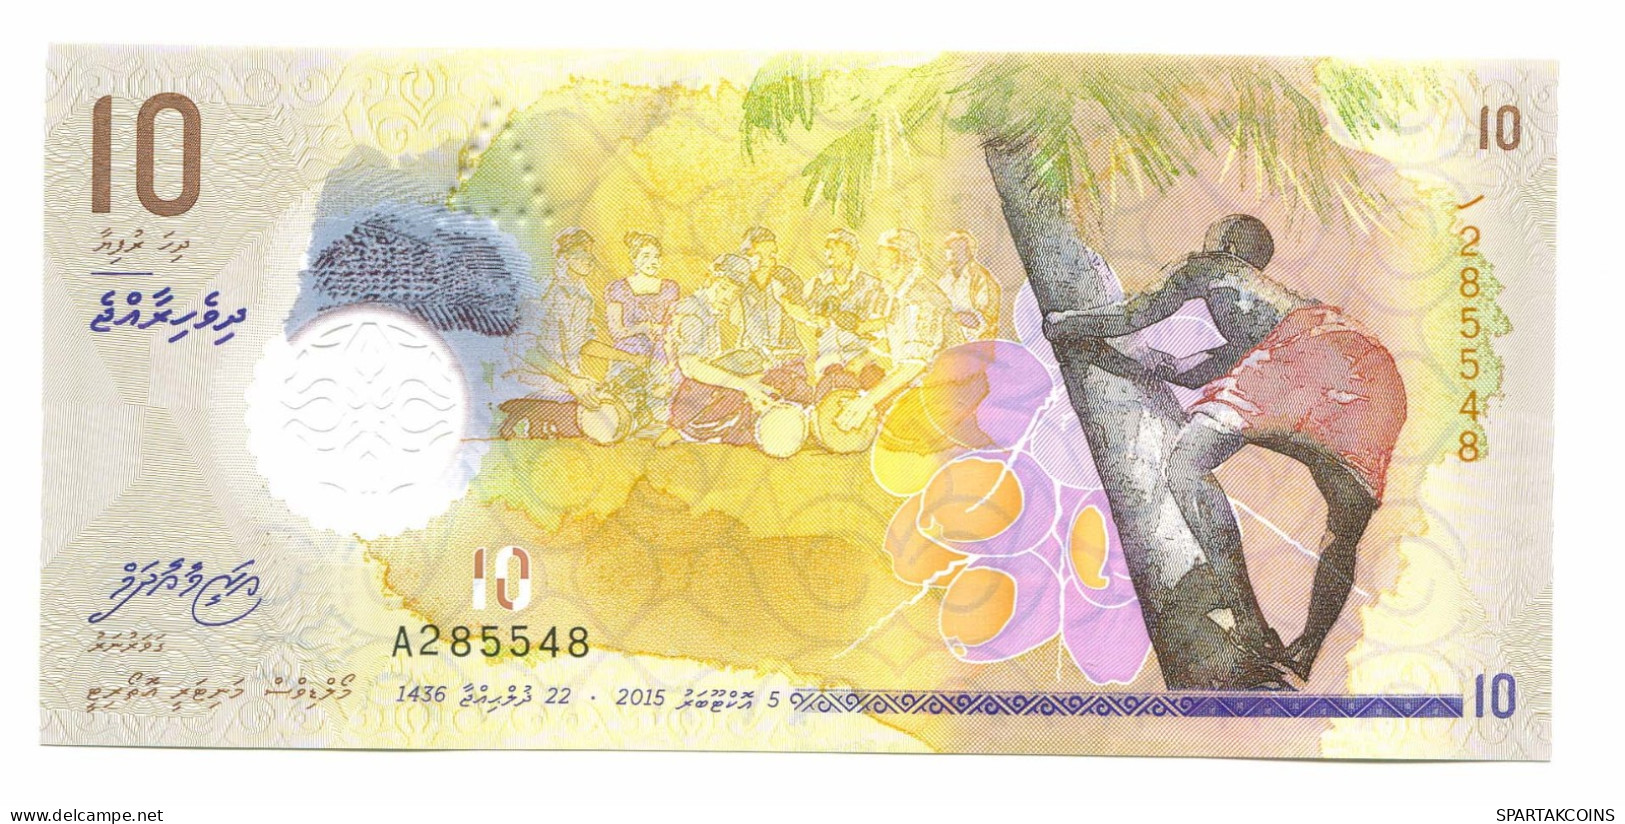 MALDIVES 10 RUFIYAA 2015(2016) POLYMER NOTE UNC P10964.2 - [11] Local Banknote Issues